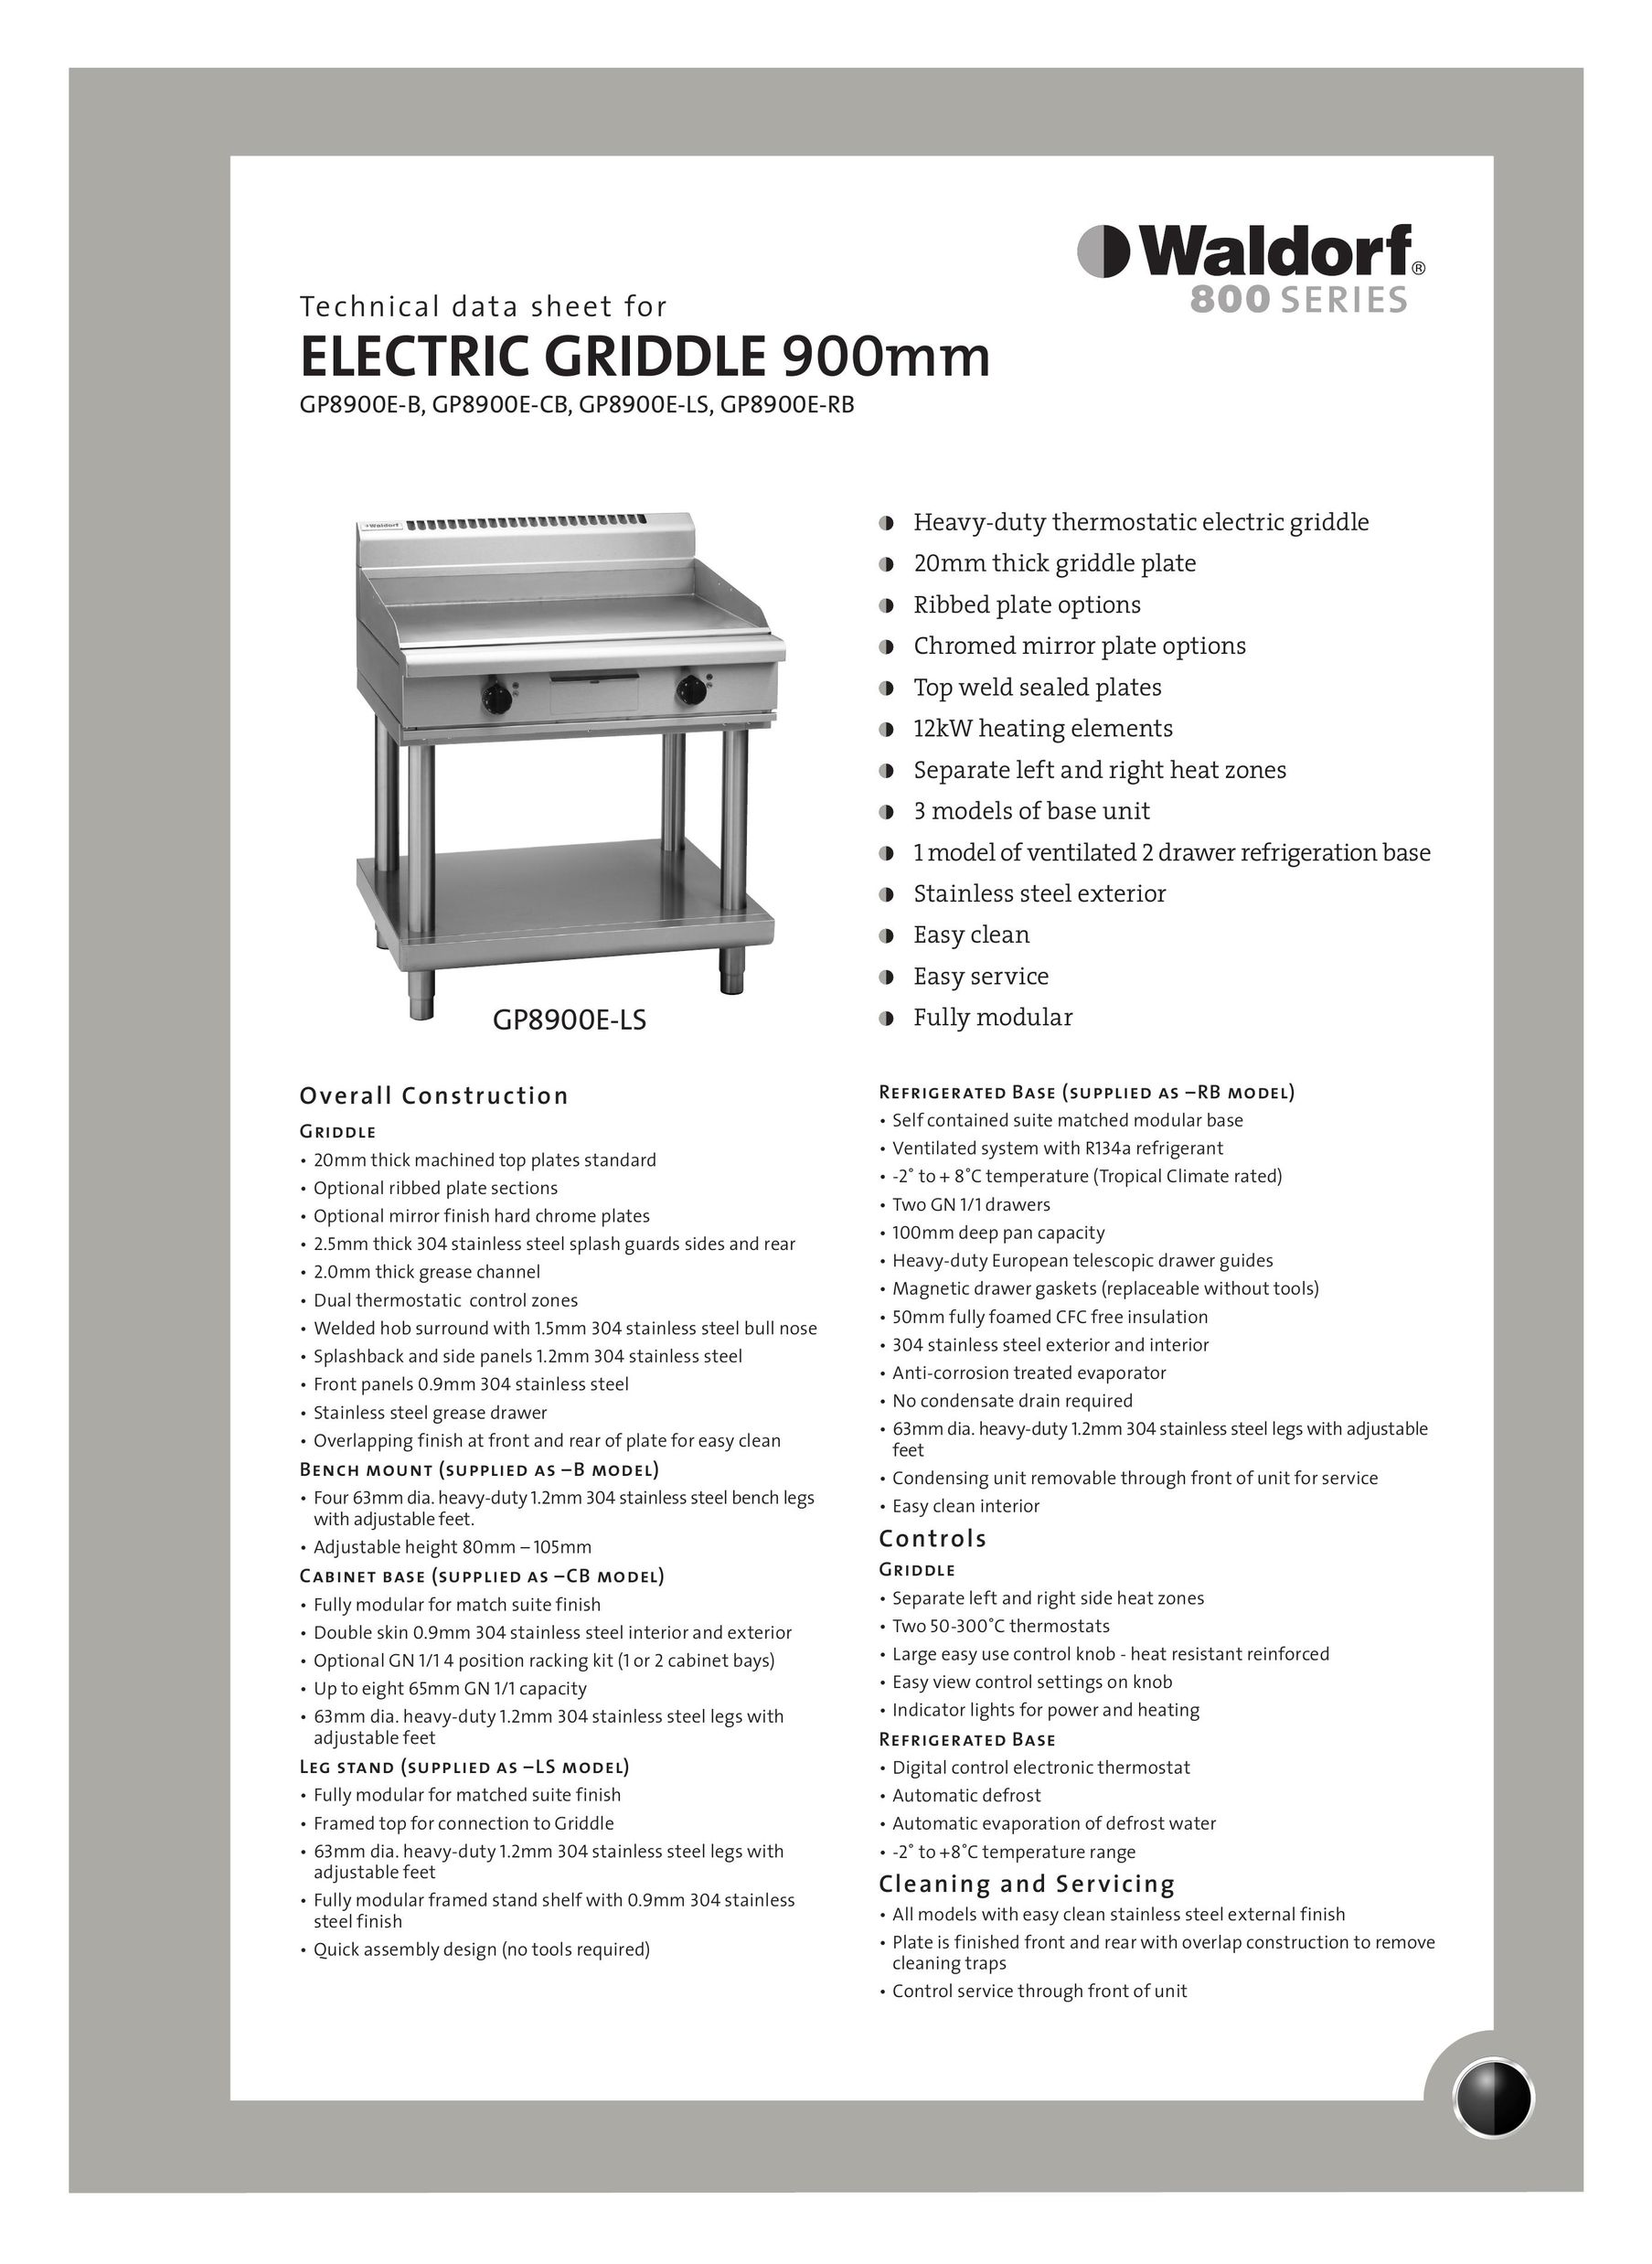 Moffat GP8900E-LS Griddle User Manual